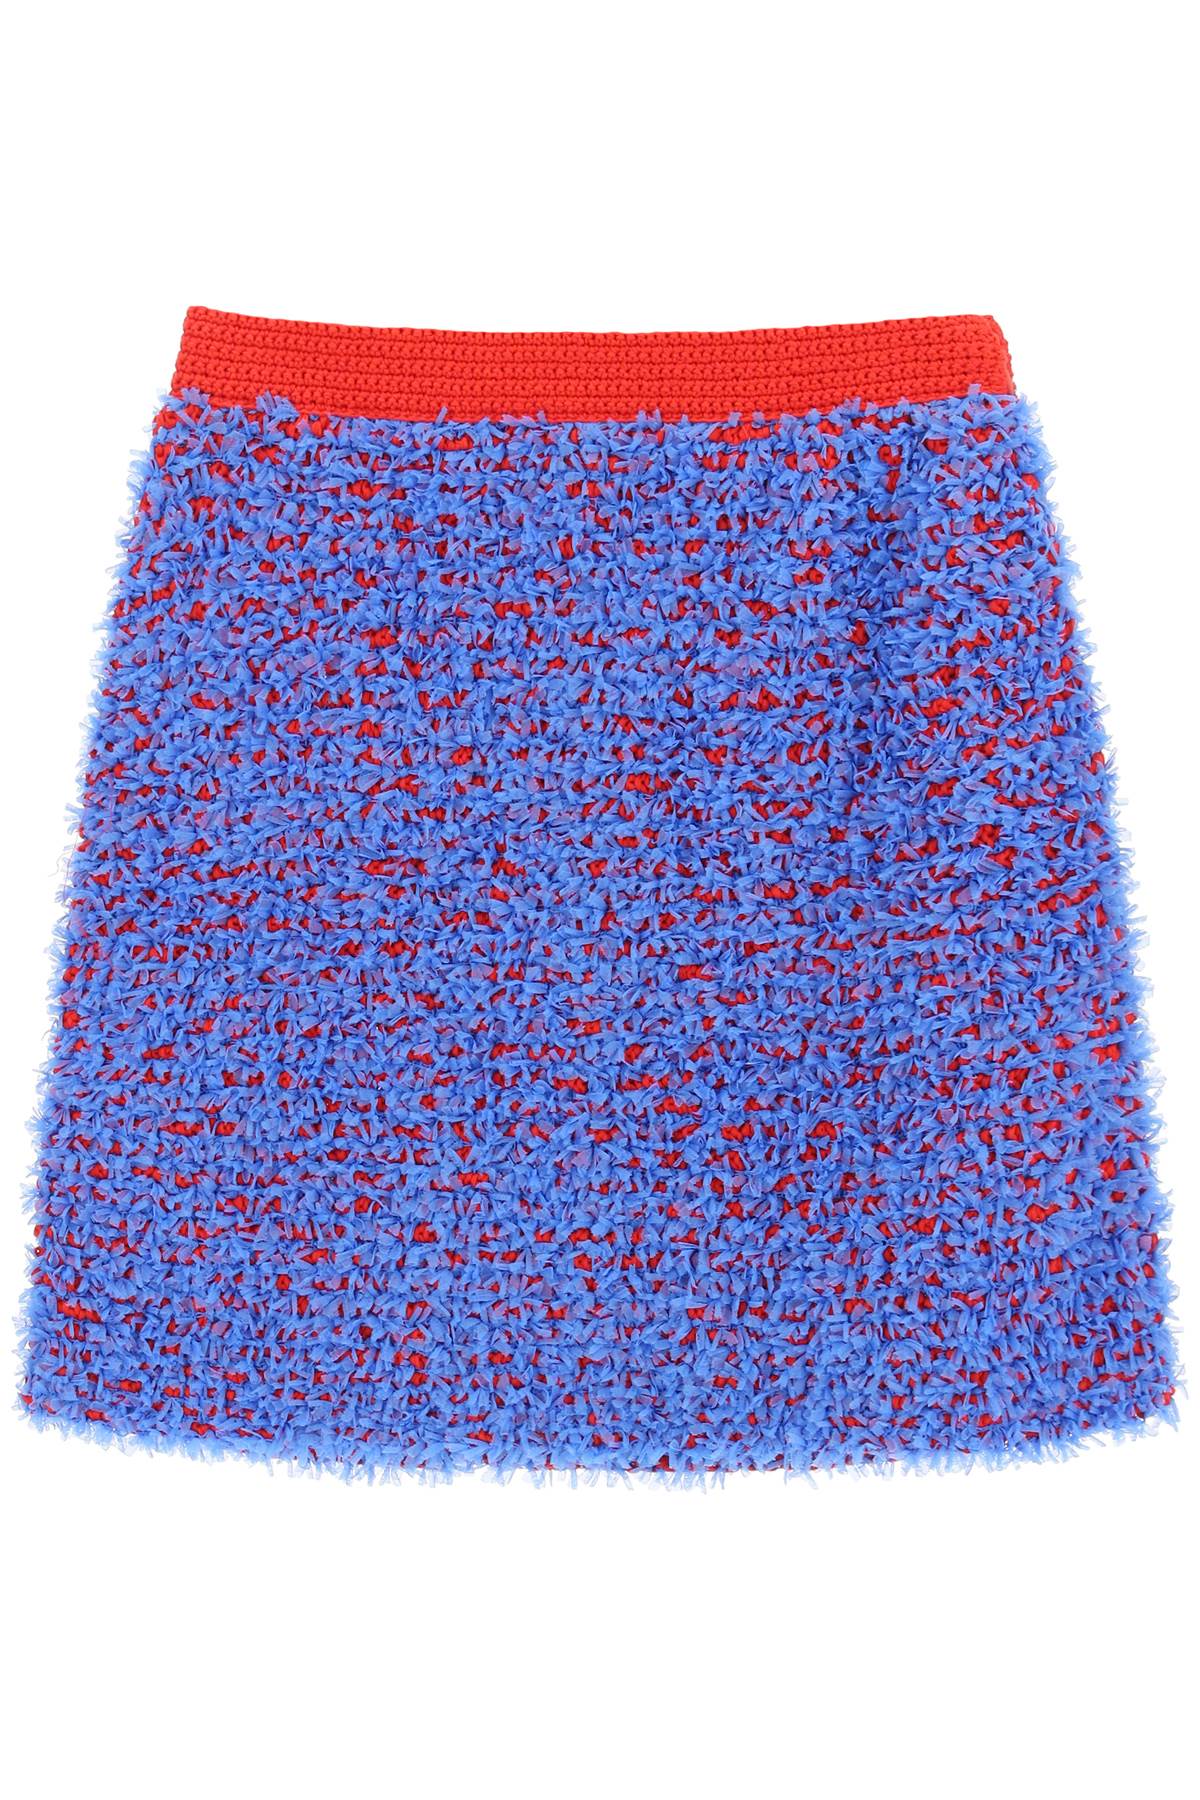 Tory Burch Tory burch confetti tweed mini skirt